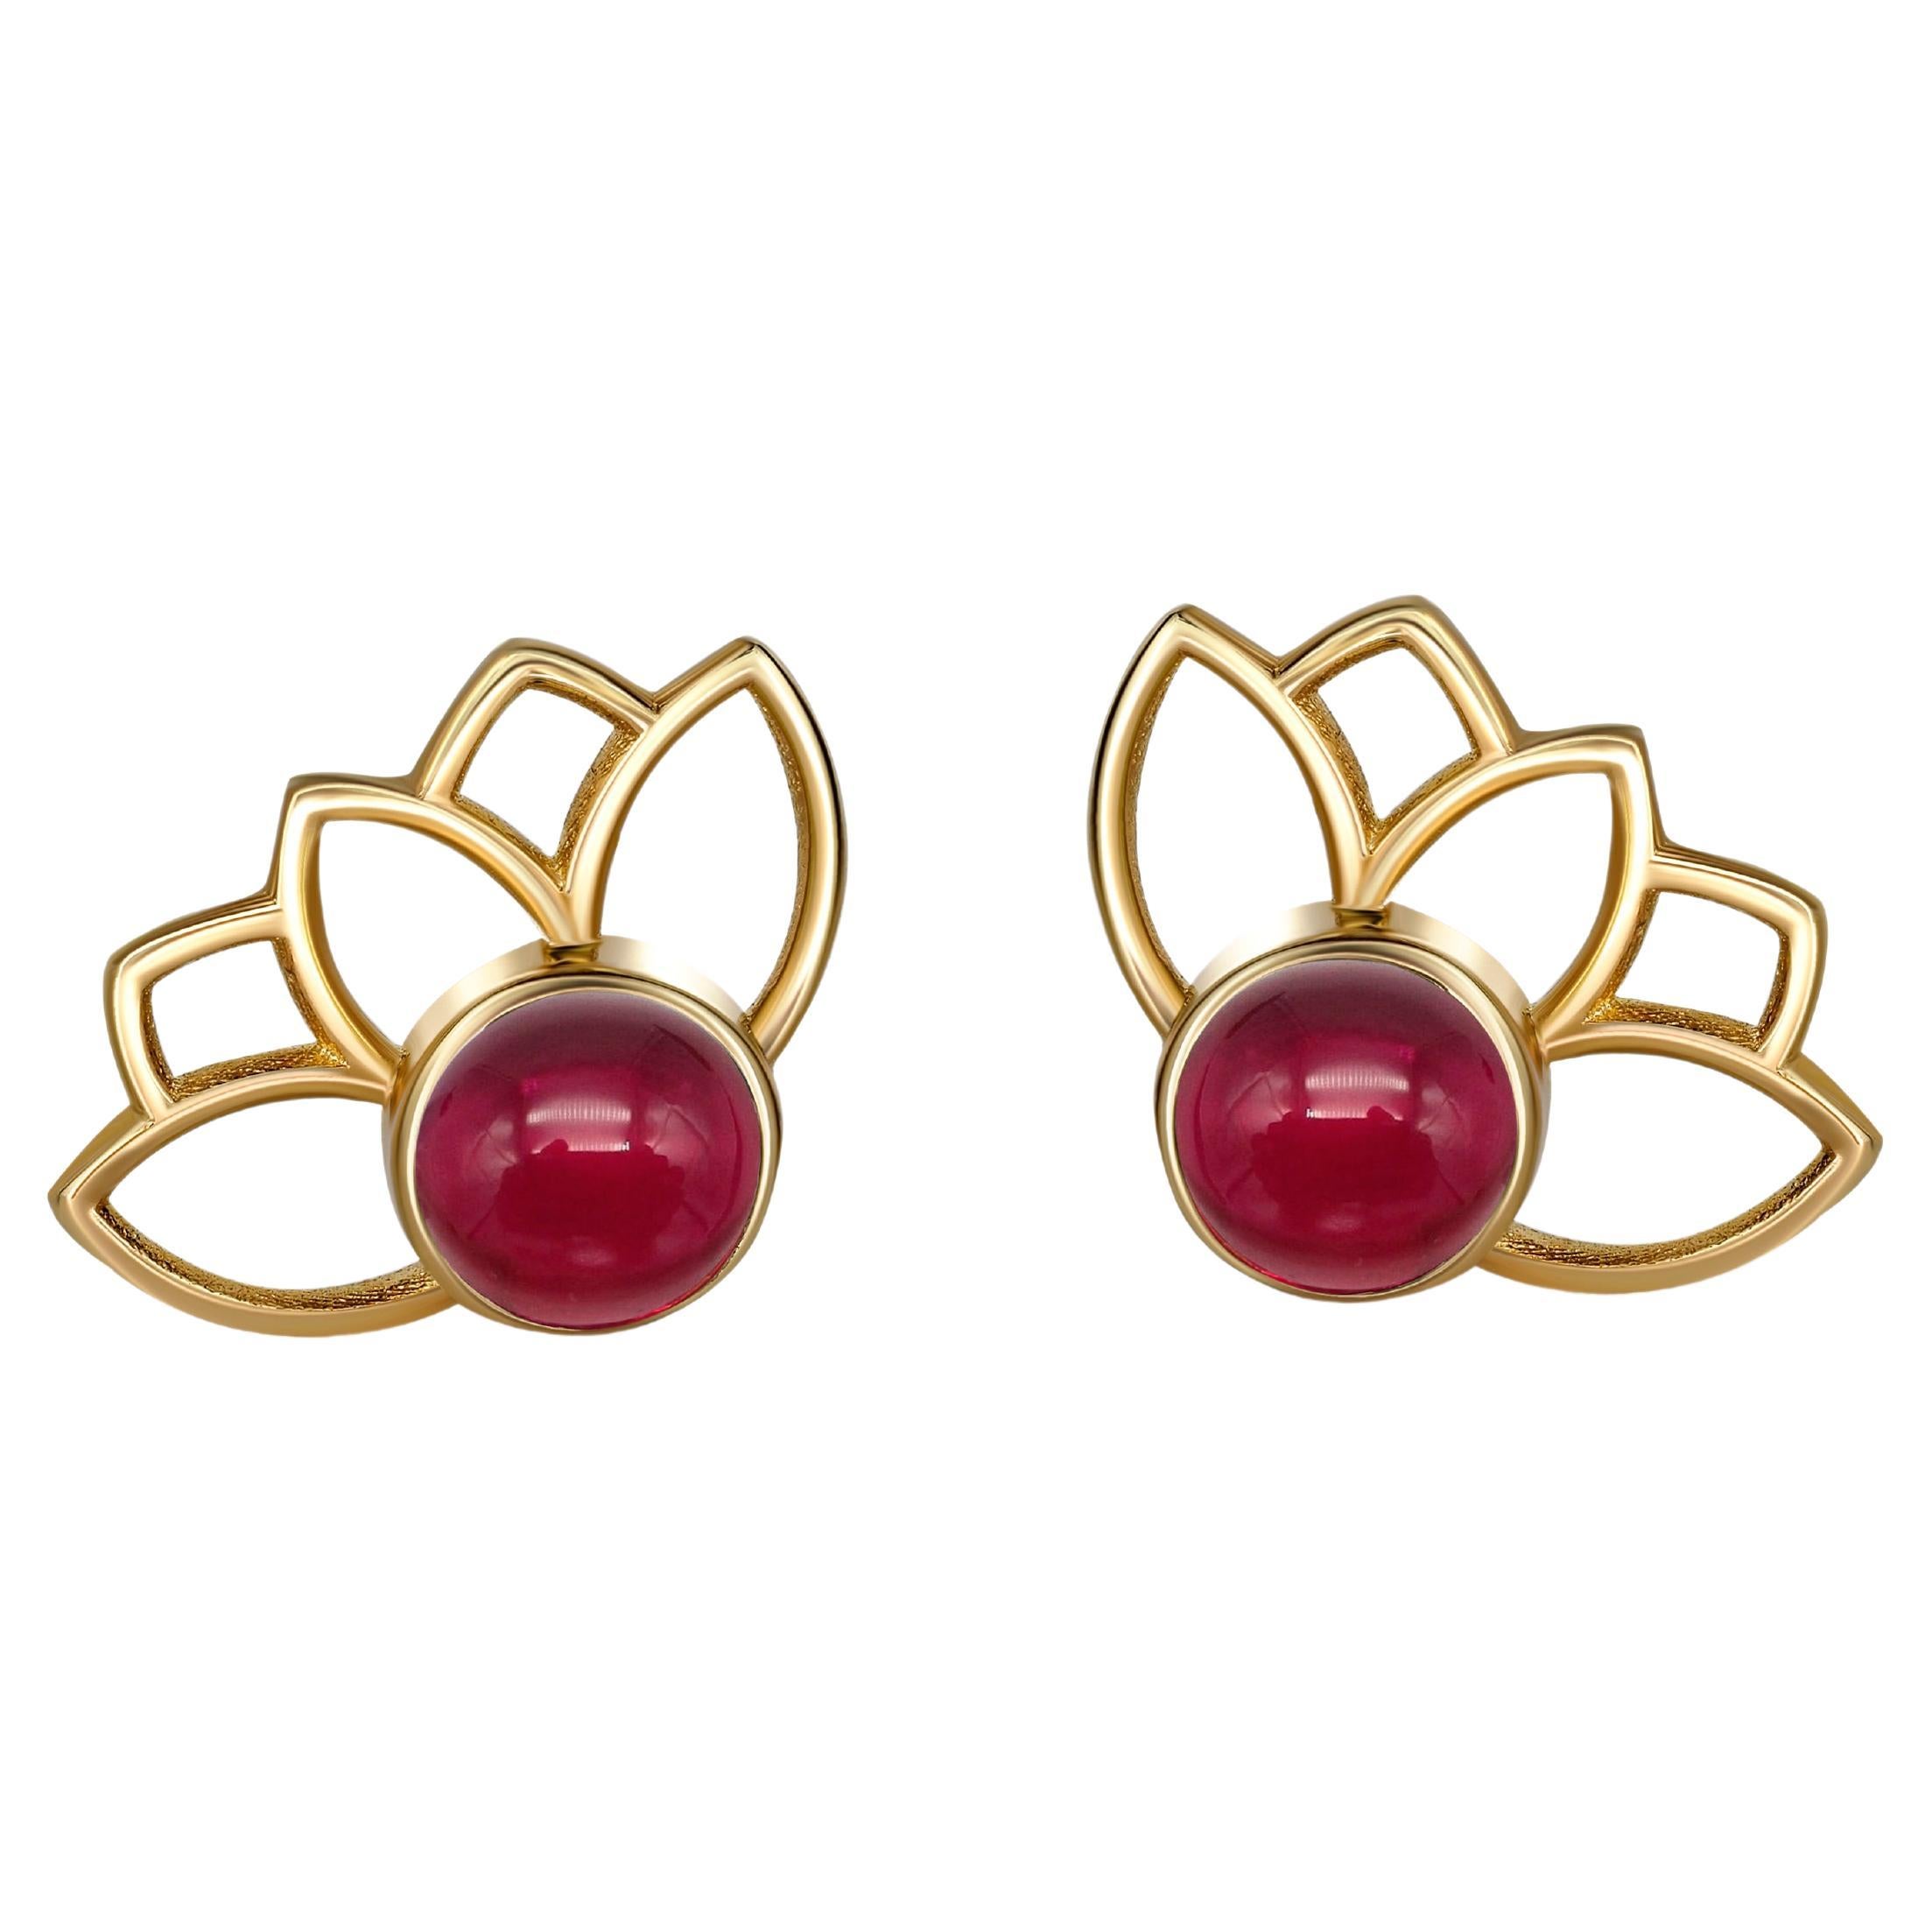 Lotus Earrings Studs with Rubies in 14k Gold. Ruby Gold Earrings For Sale